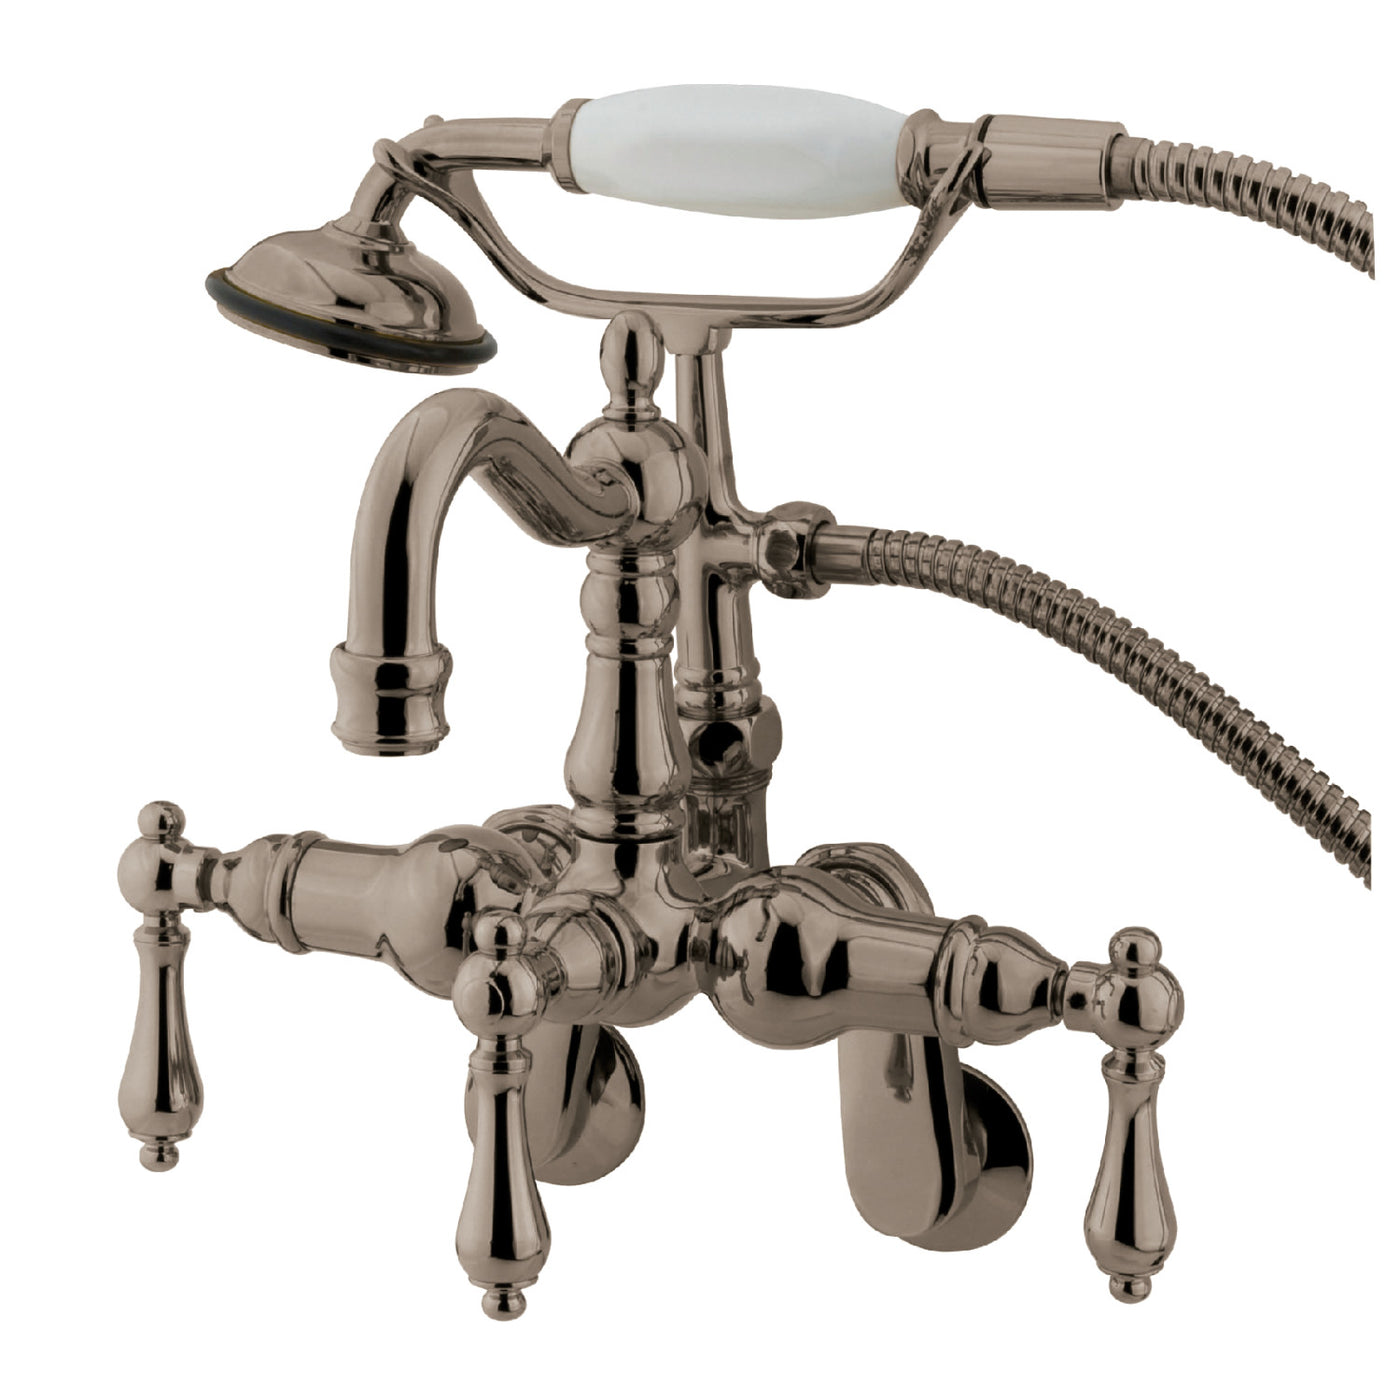 Elements of Design DT13018AL Adjustable Center Wall Mount Tub Faucet with Hand Shower, Brushed Nickel